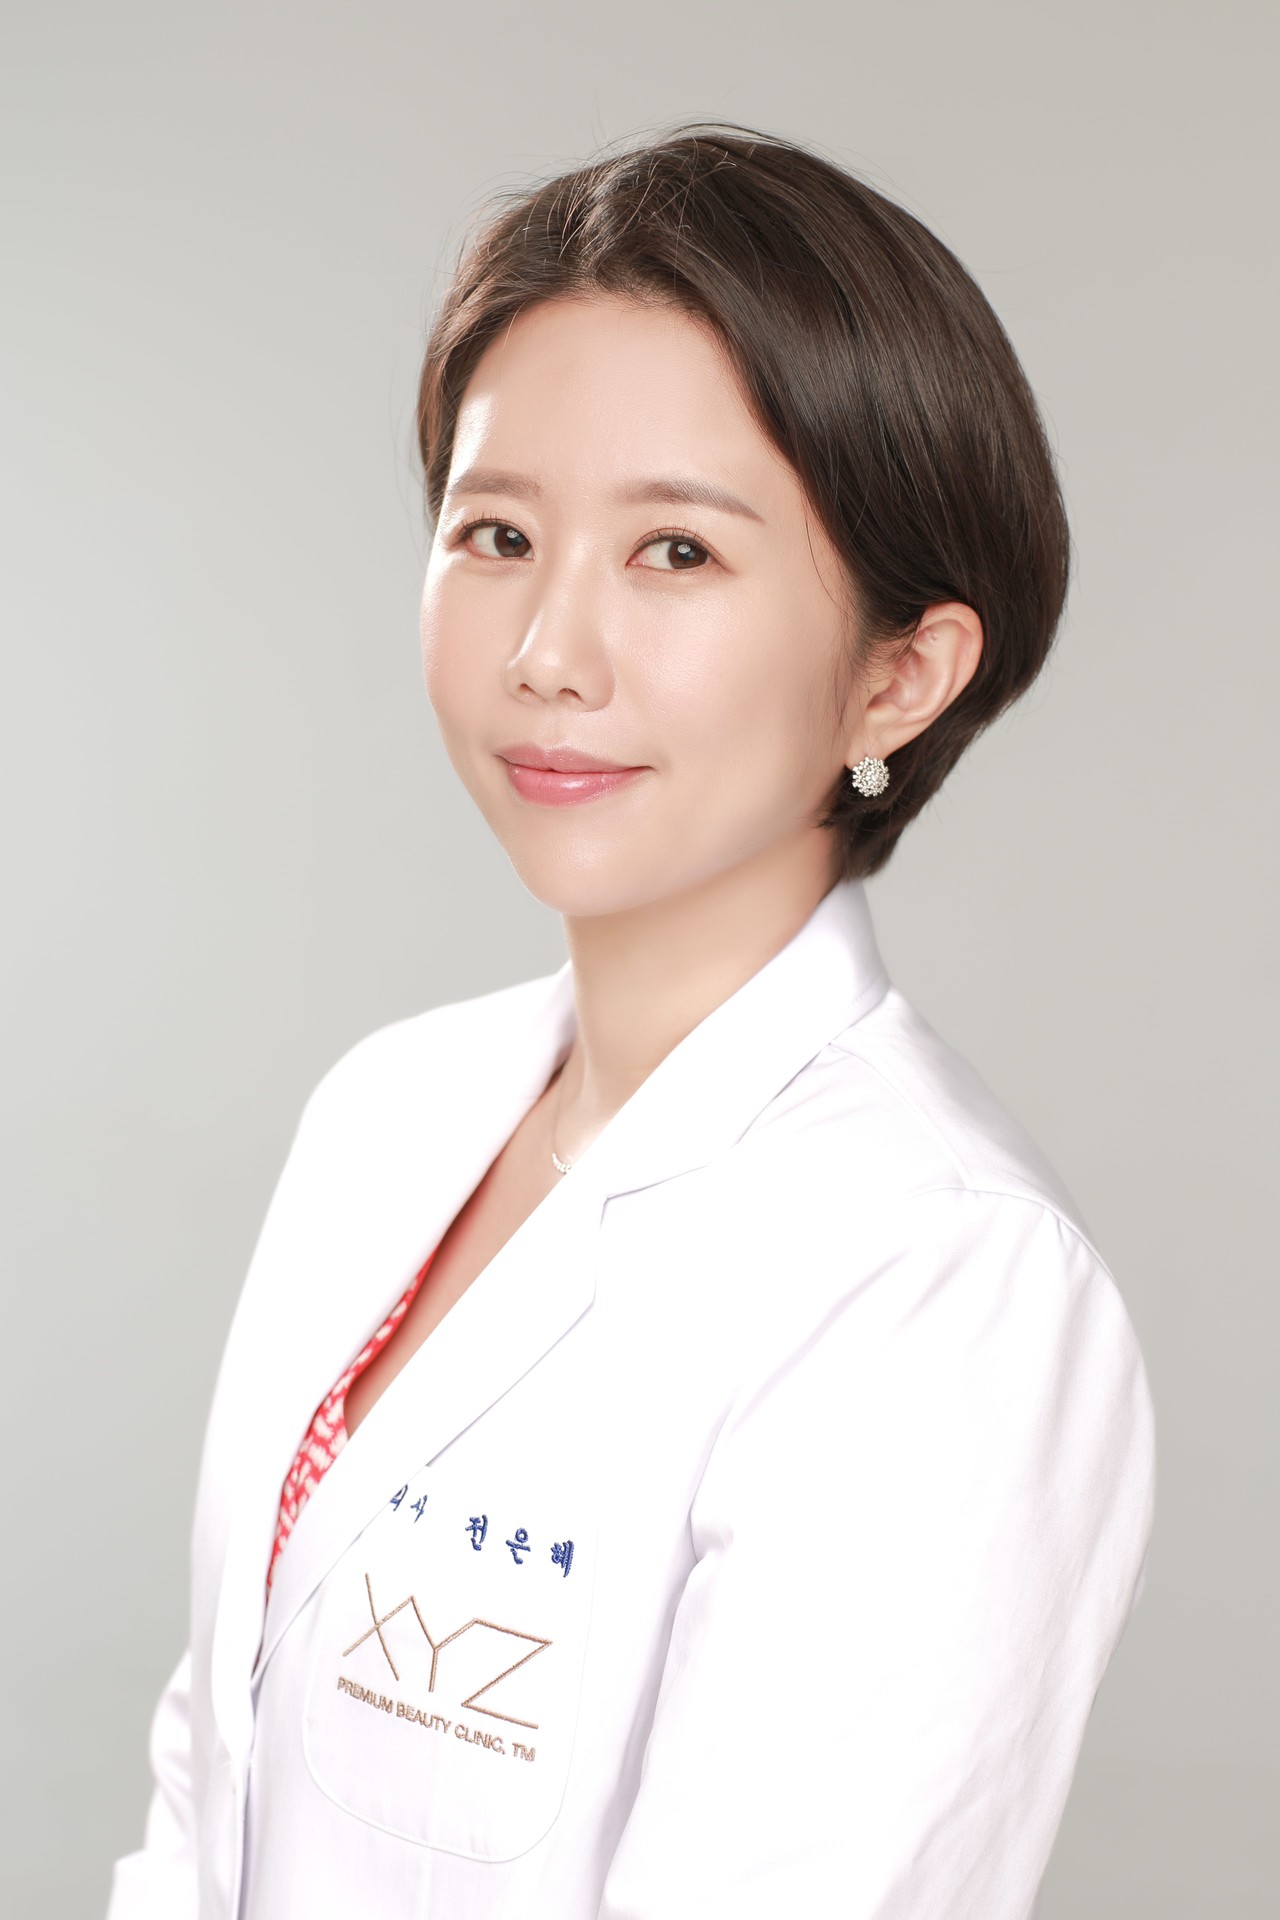 Doctor Jeon